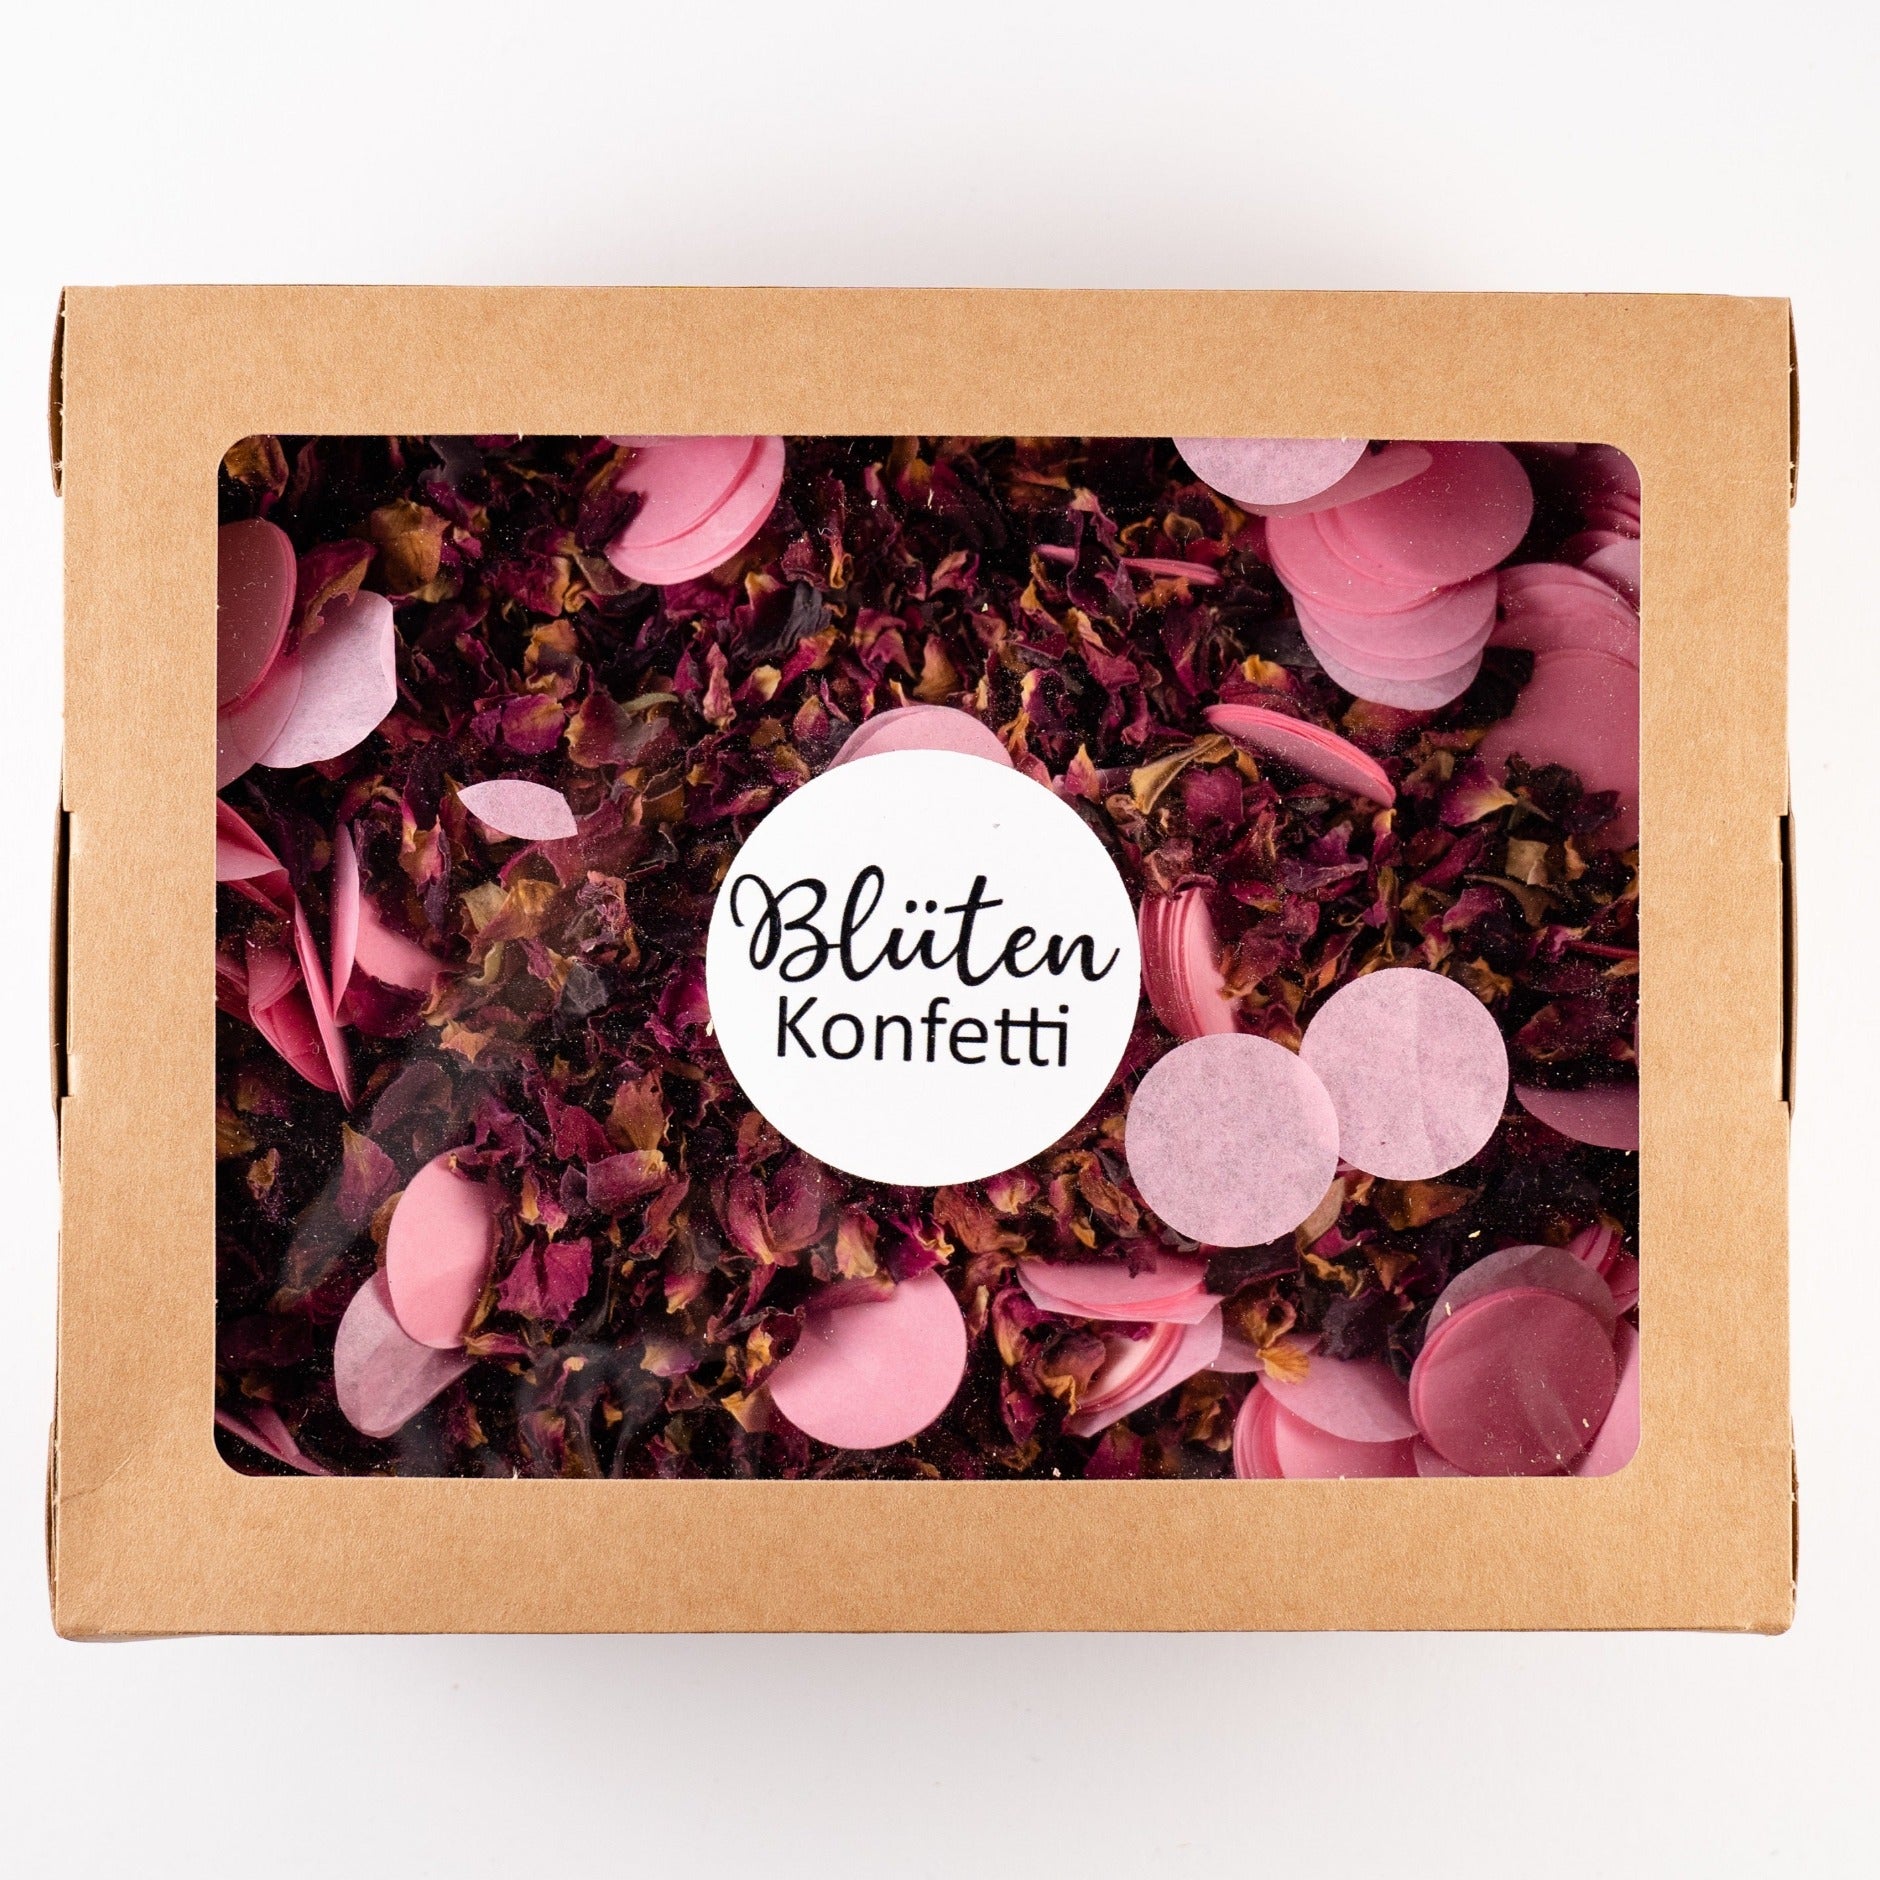 Blütenkonfetti Red Romance mit Seidenpapier in der Box